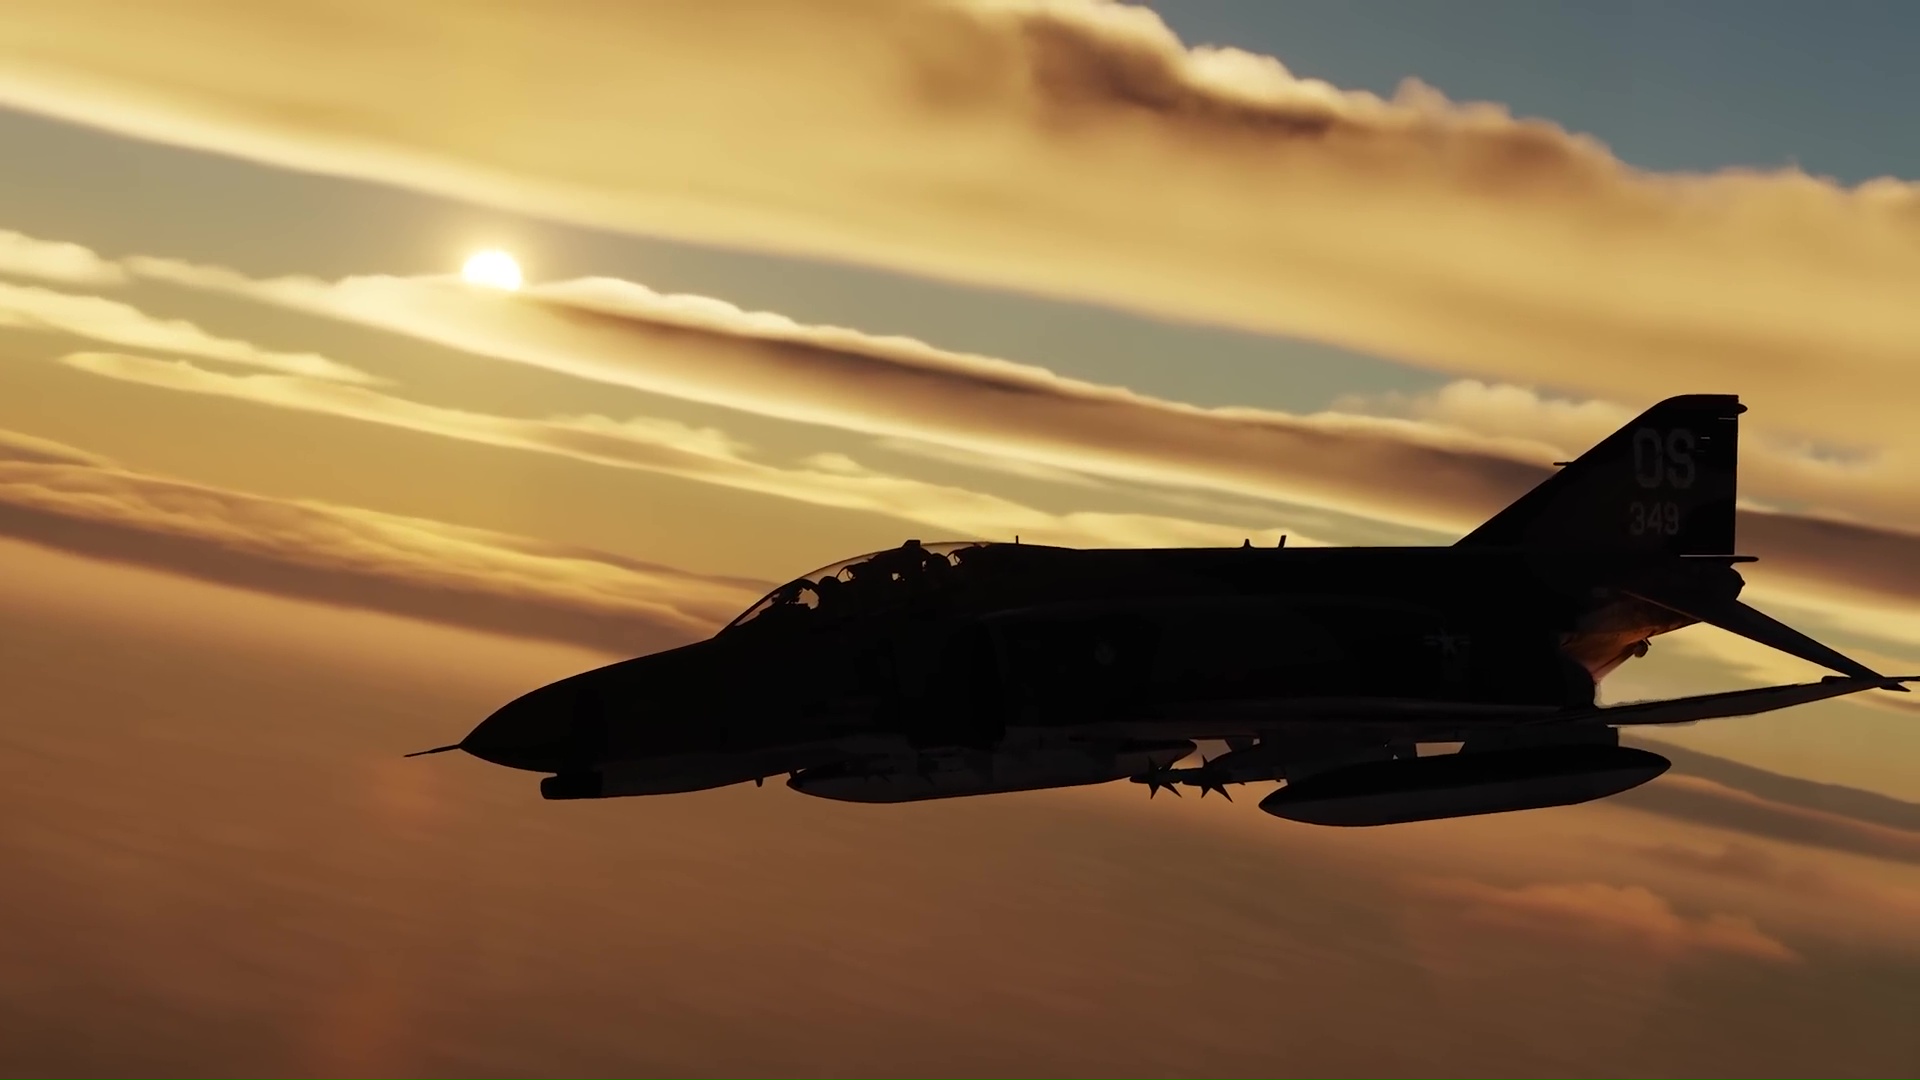 An F-4 Phantom silhouetted against a setting sun.